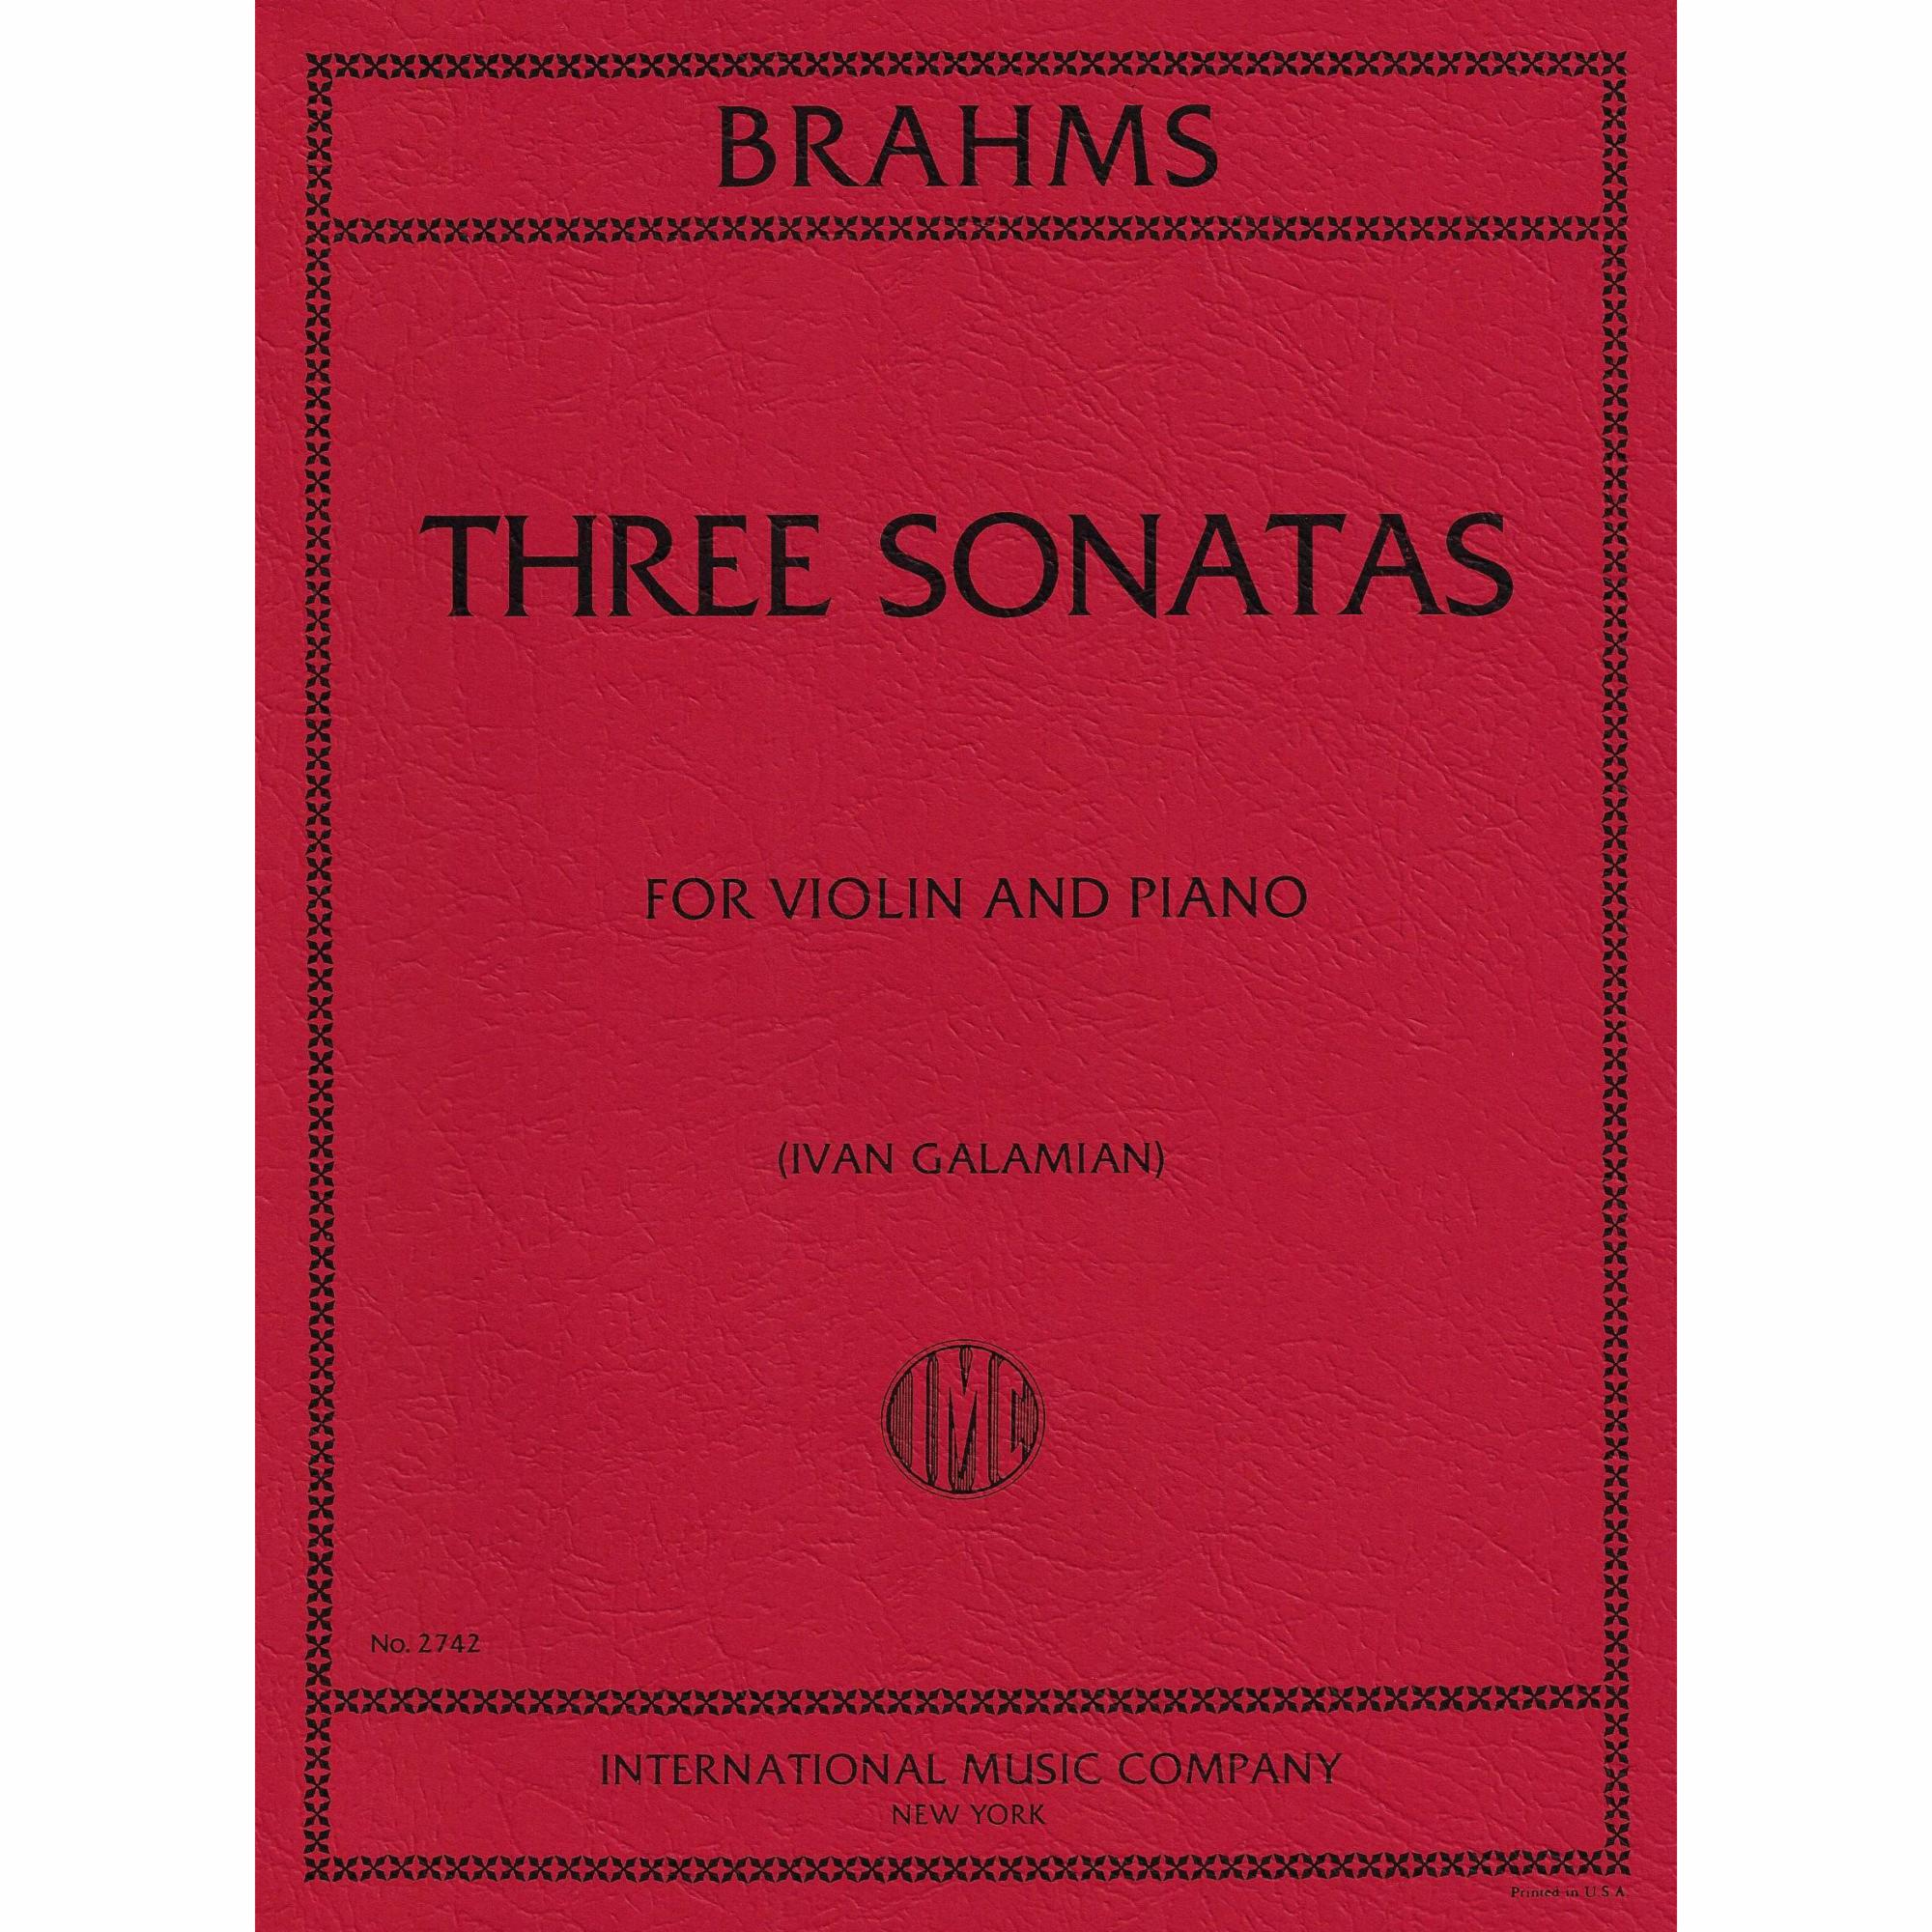 Brahms -- Three Sonatas for Violin and Piano